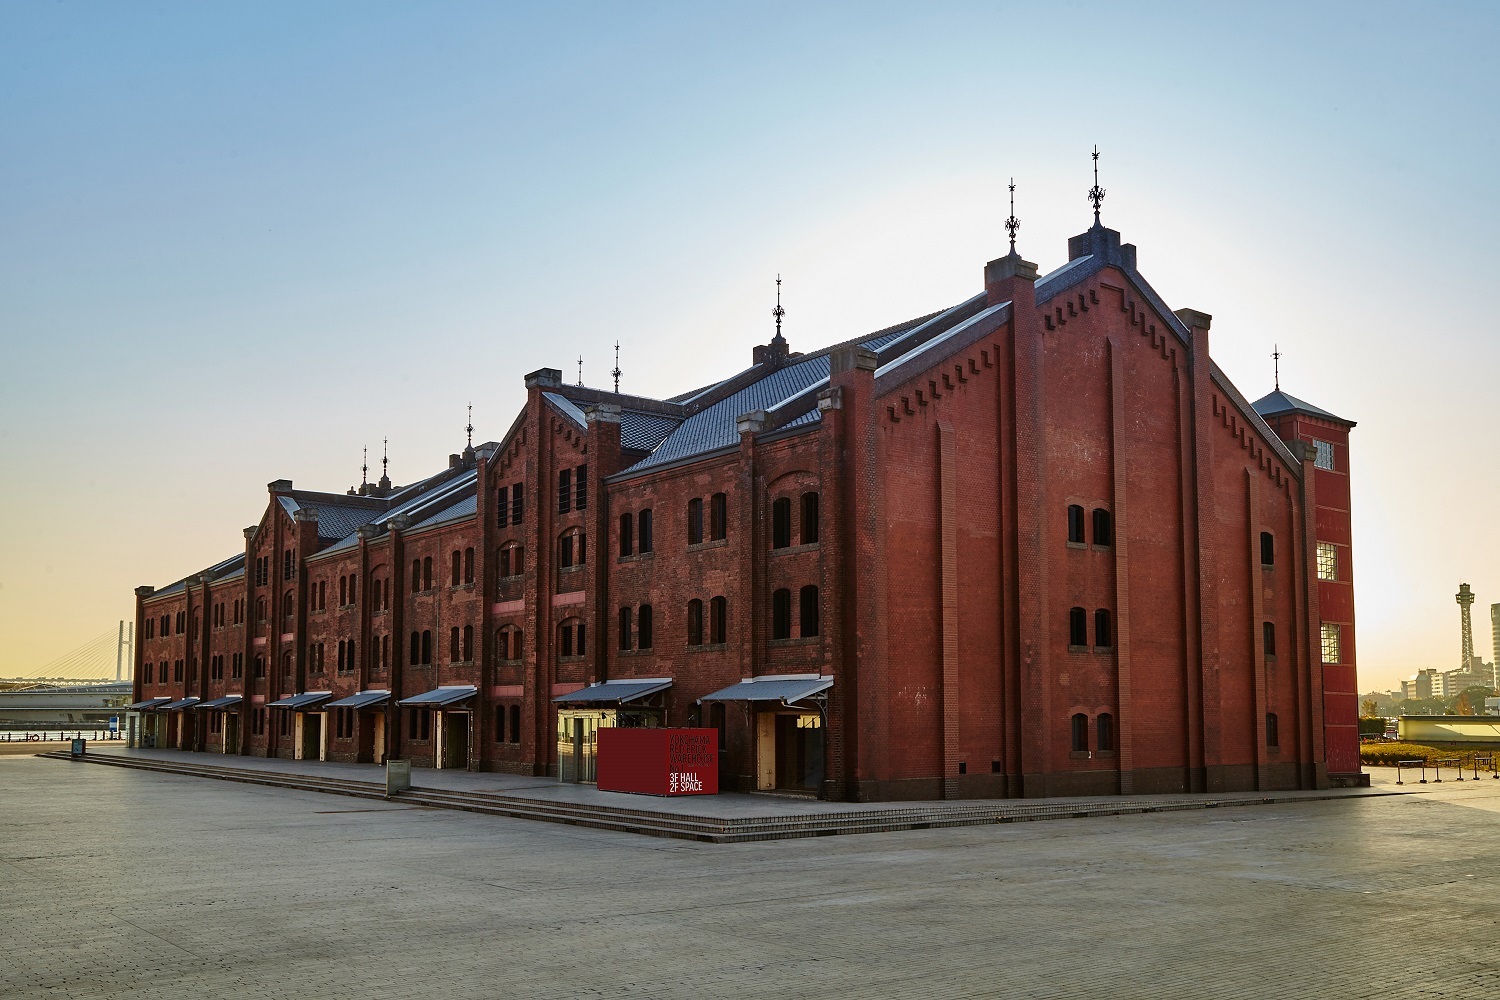 Yokohama Red Brick Warehouse will be closed from May to December 2022